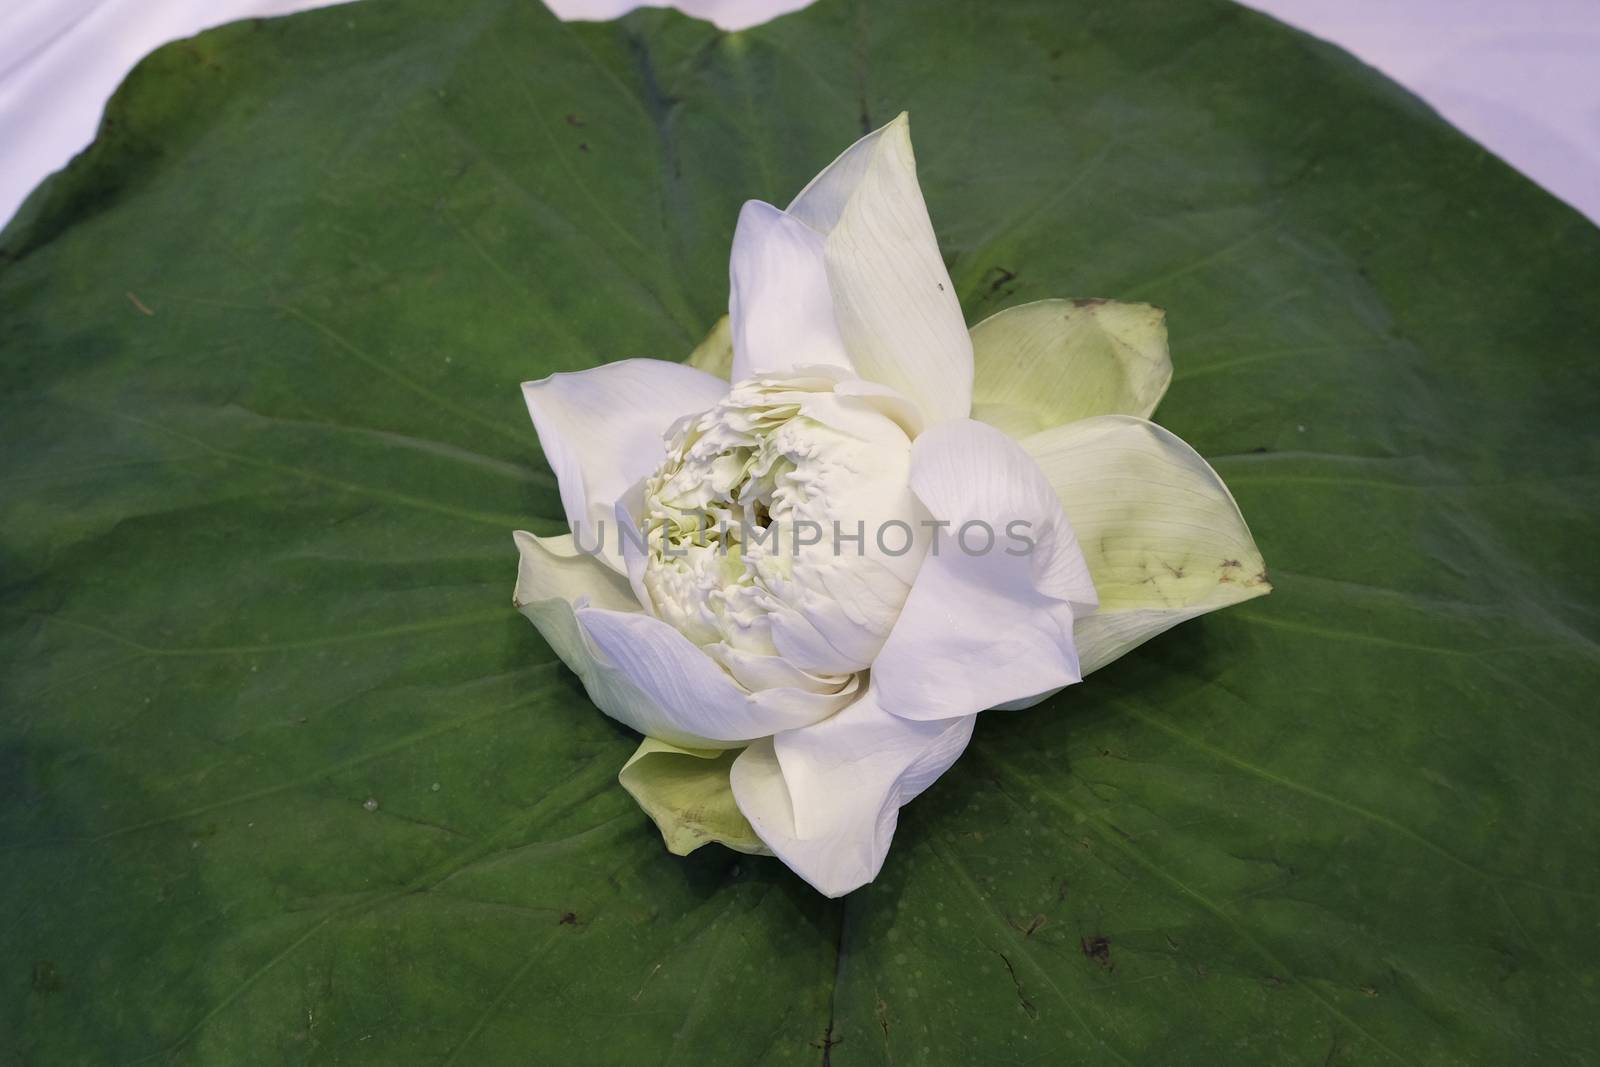 White Lotus flower isolate on lotus leaf by art9858